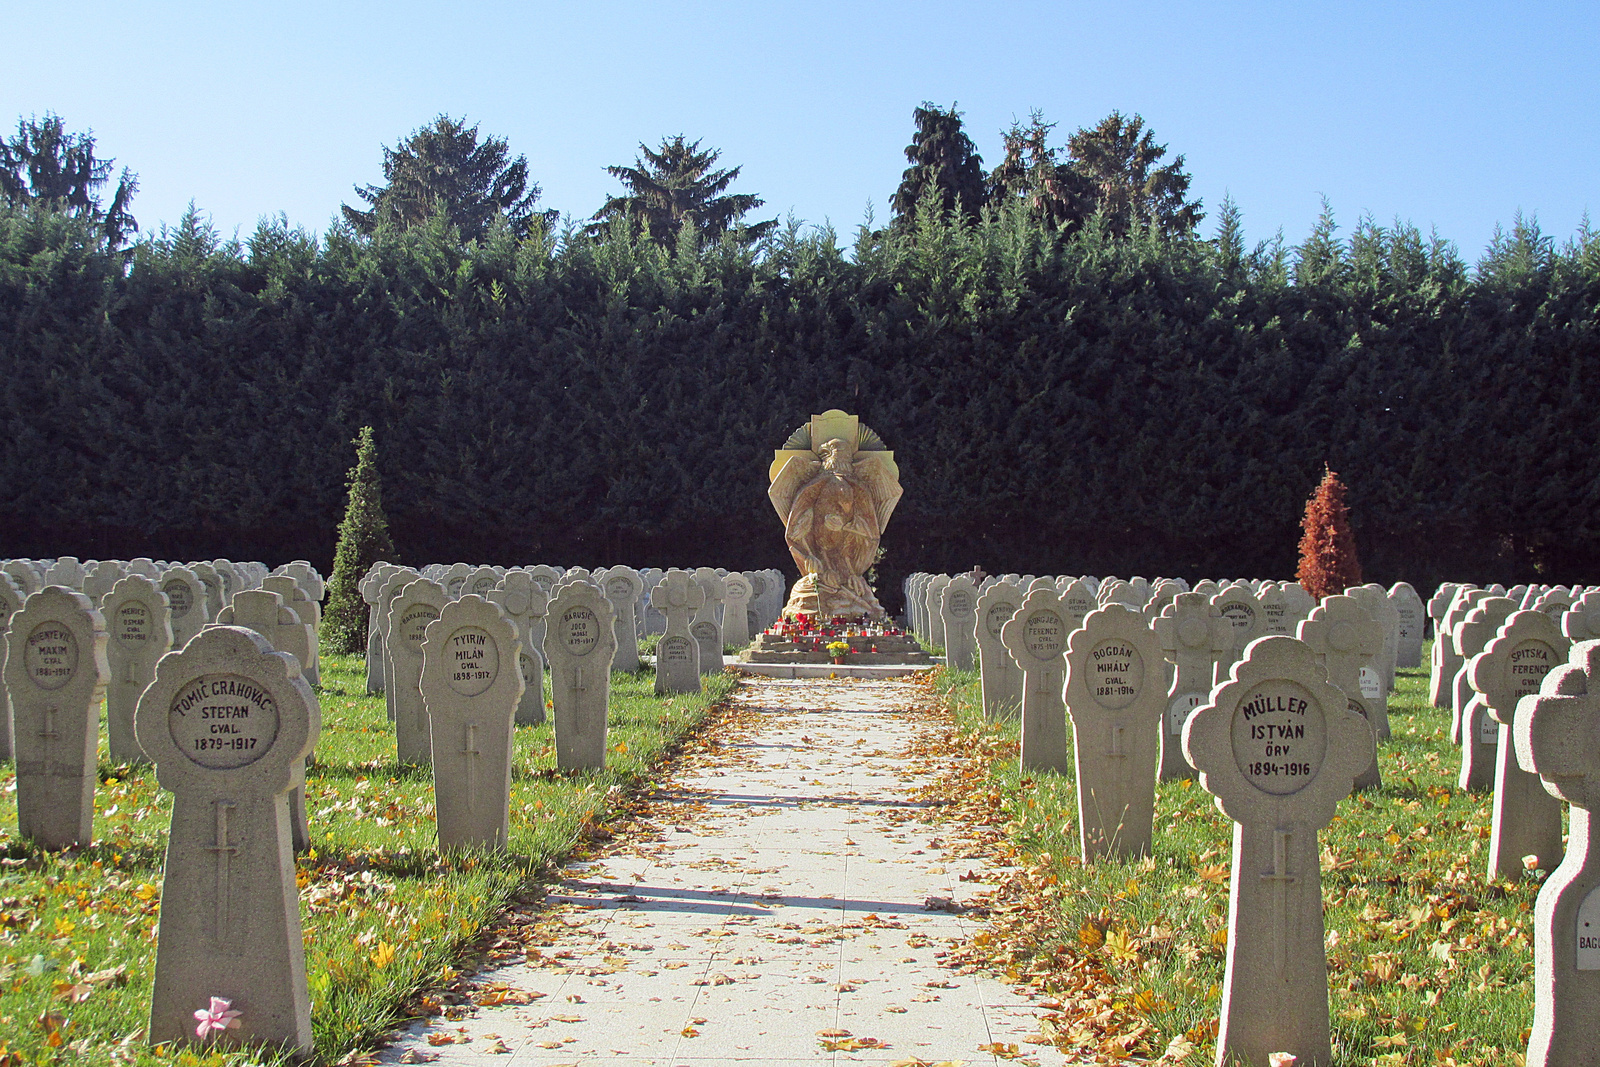 Katonai temető